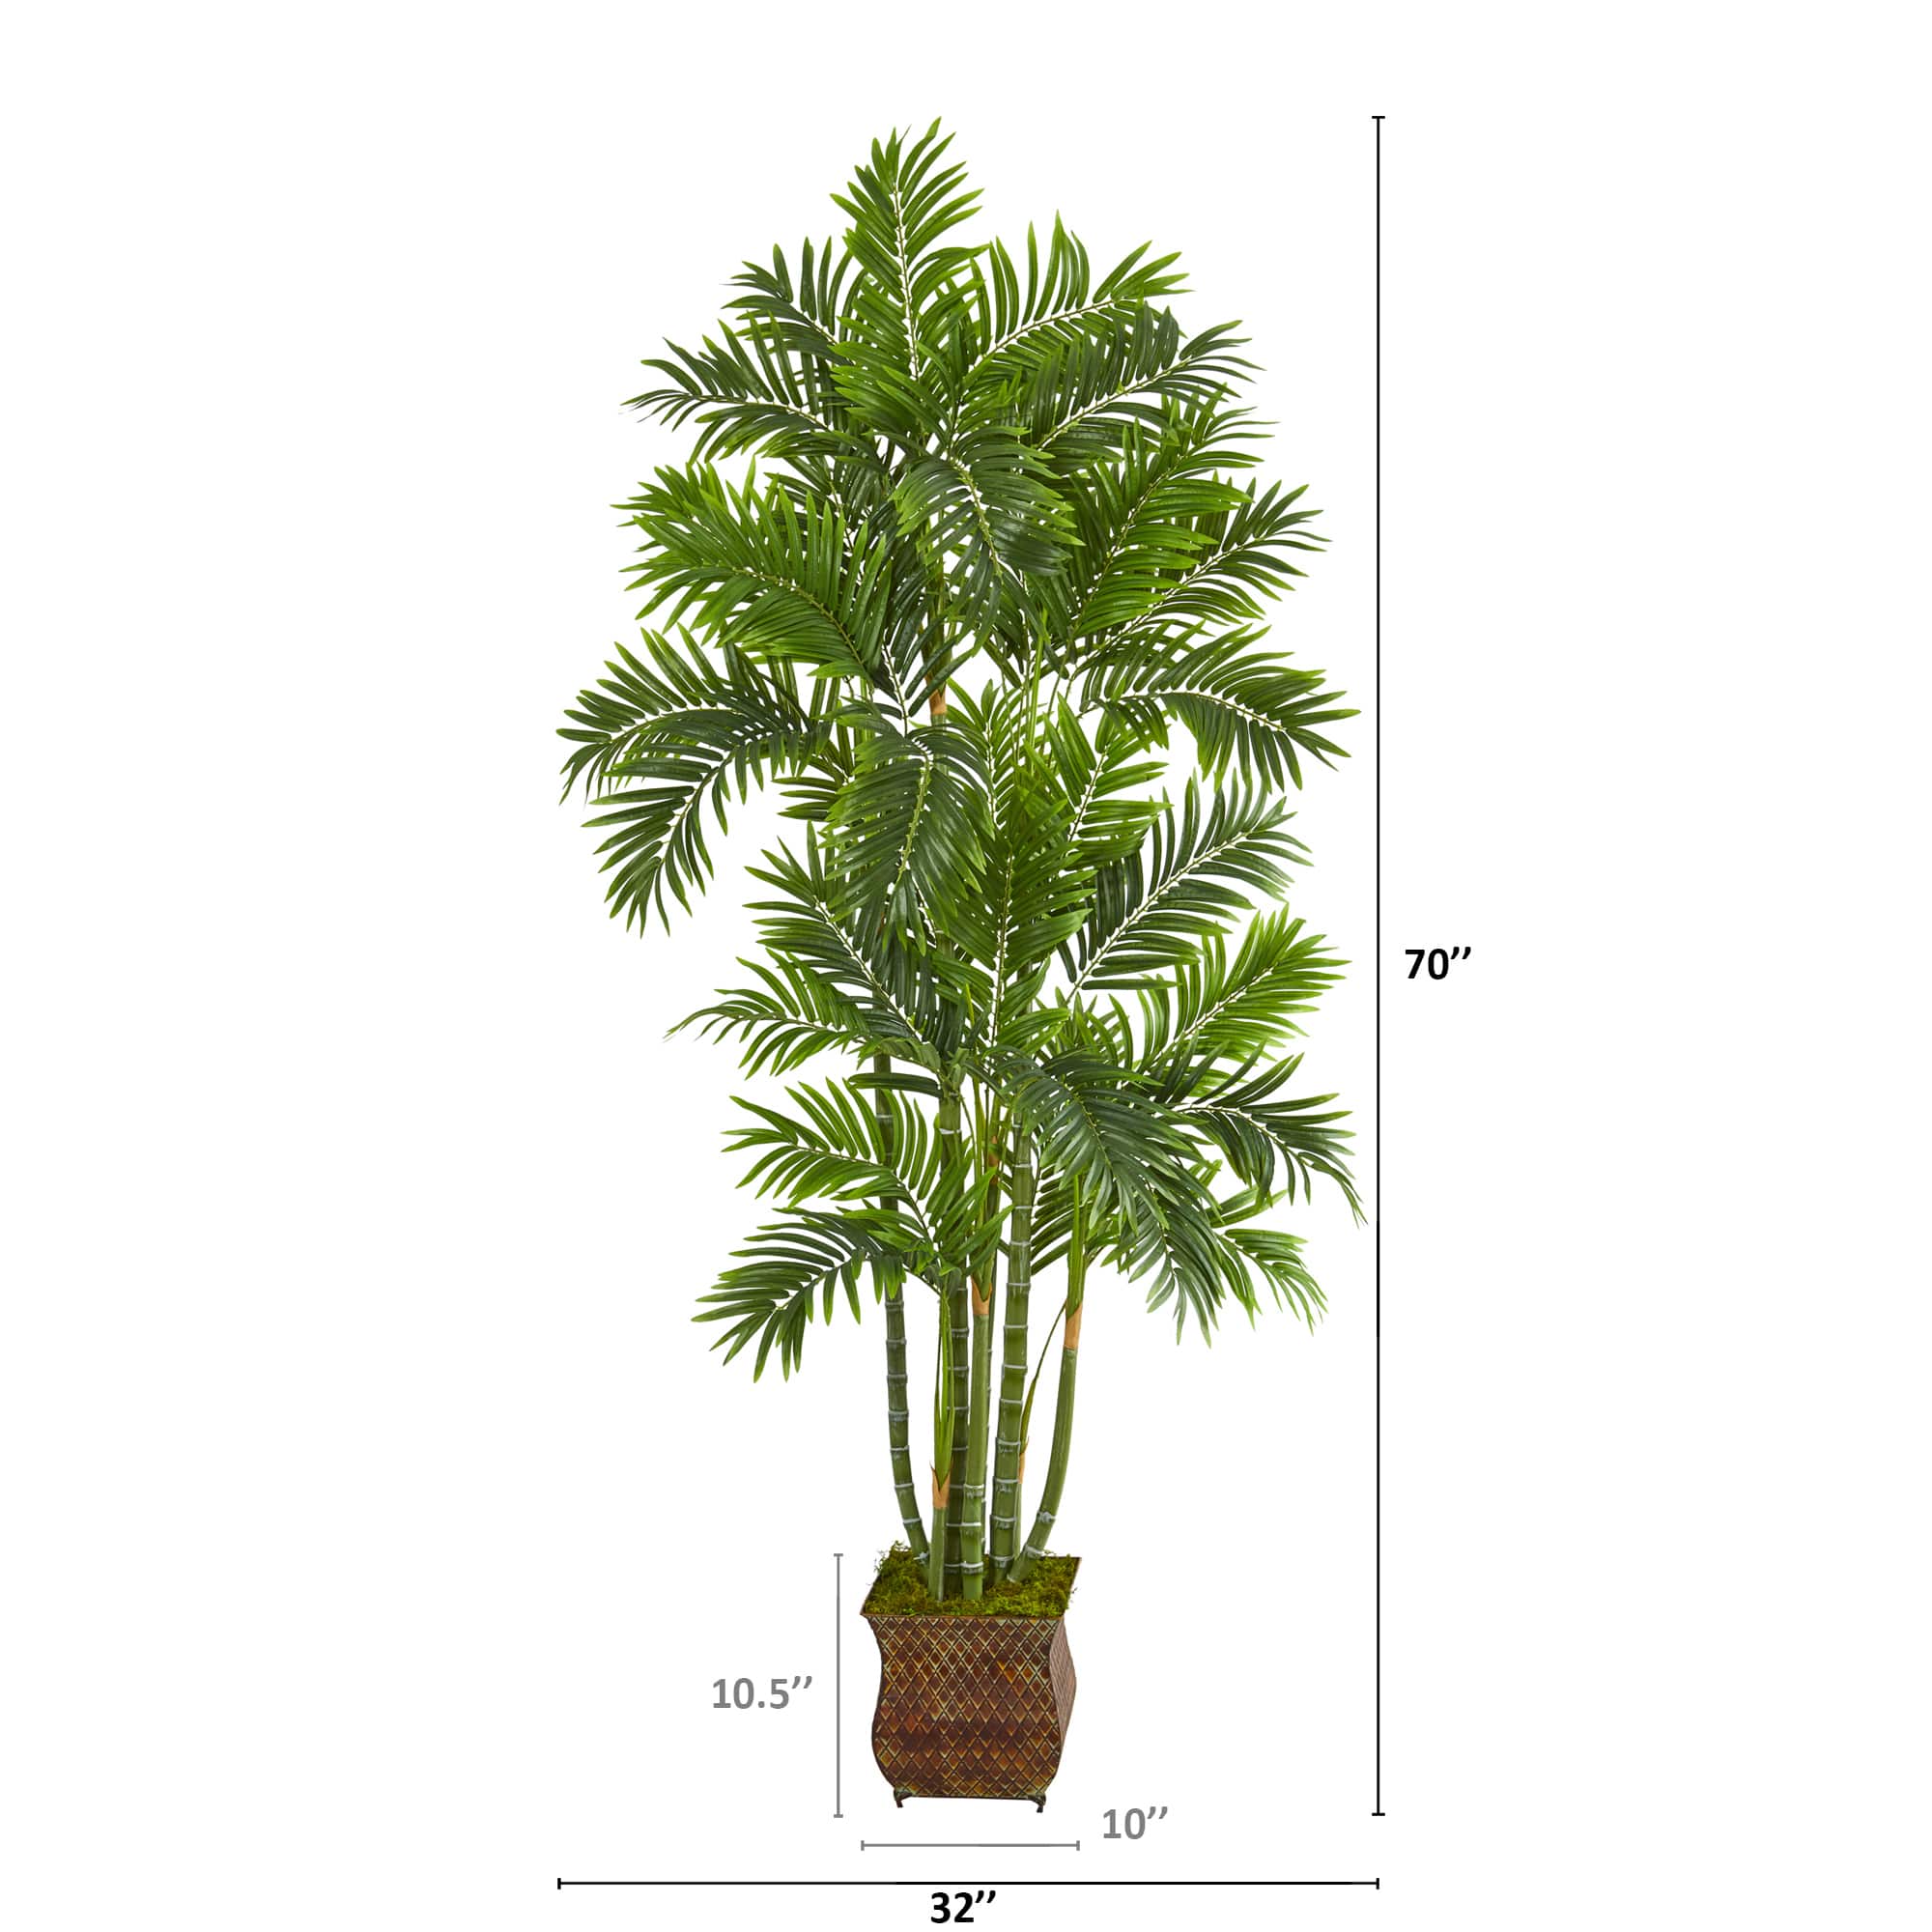 5.5ft. Areca Palm Tree in Metal Planter